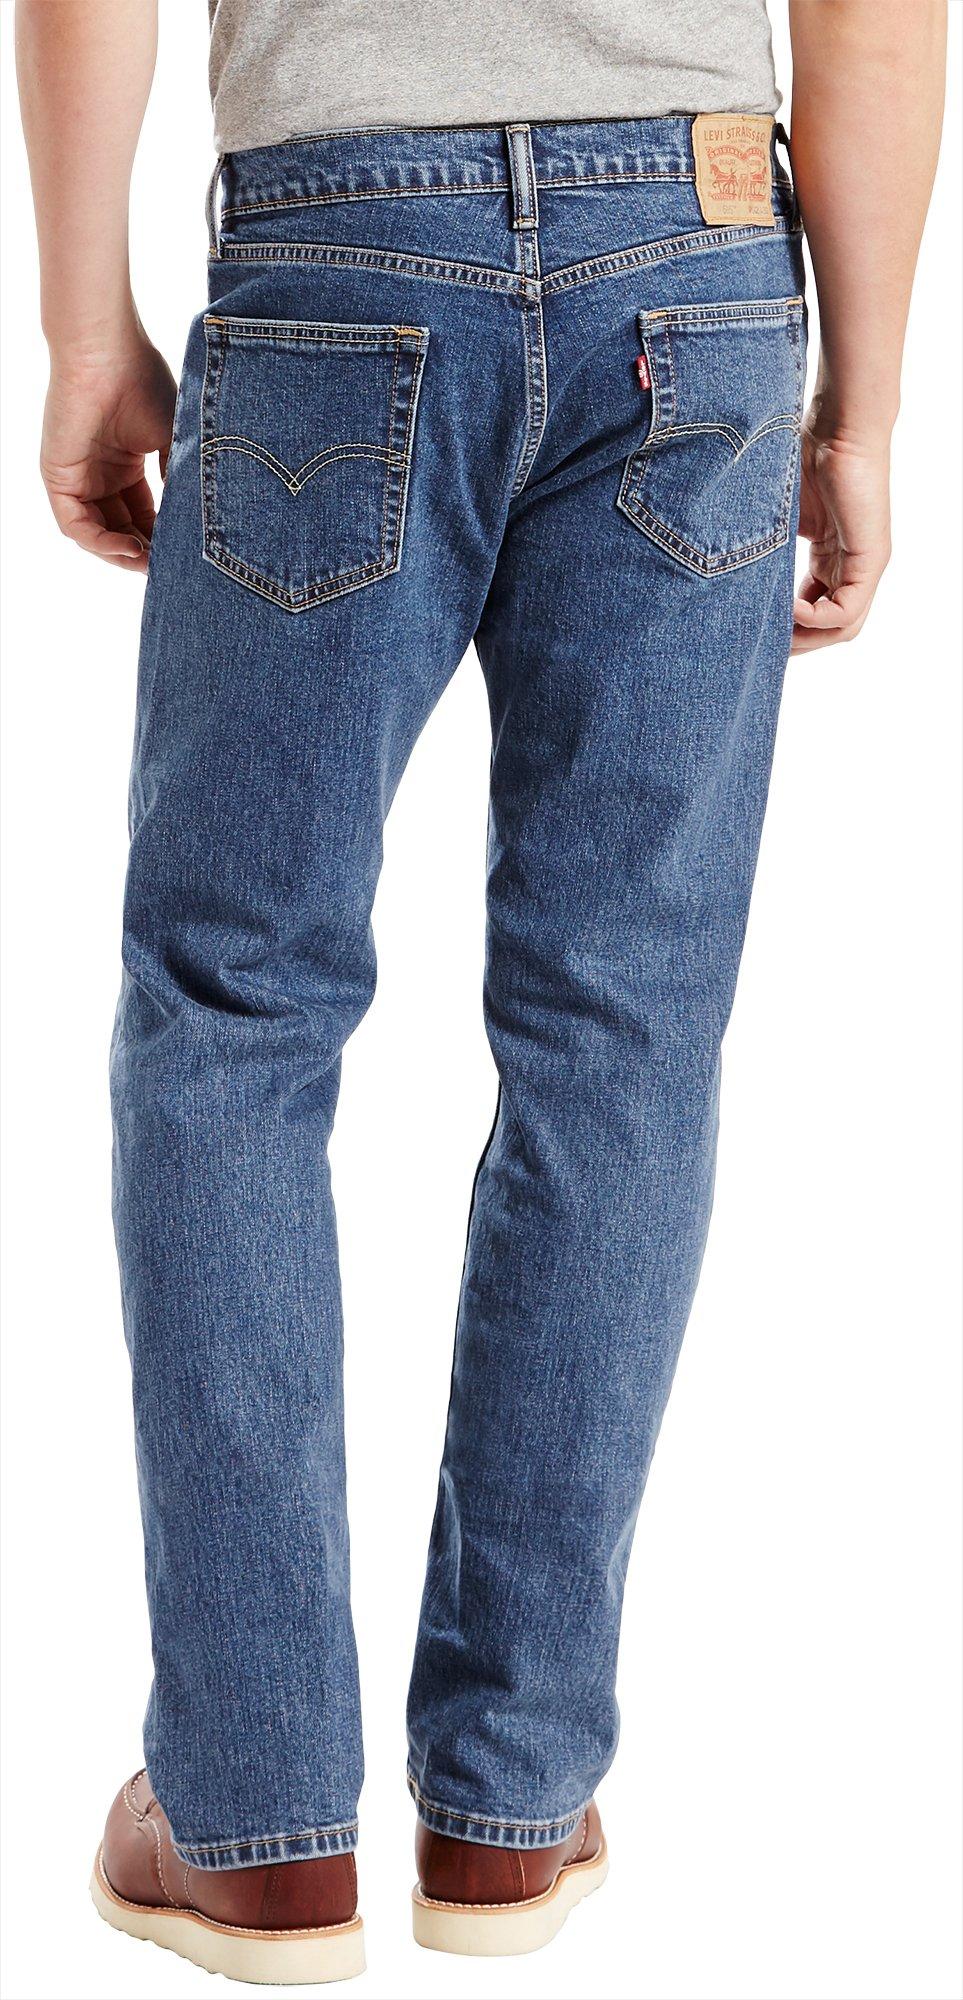 levis 505 stretch jeans